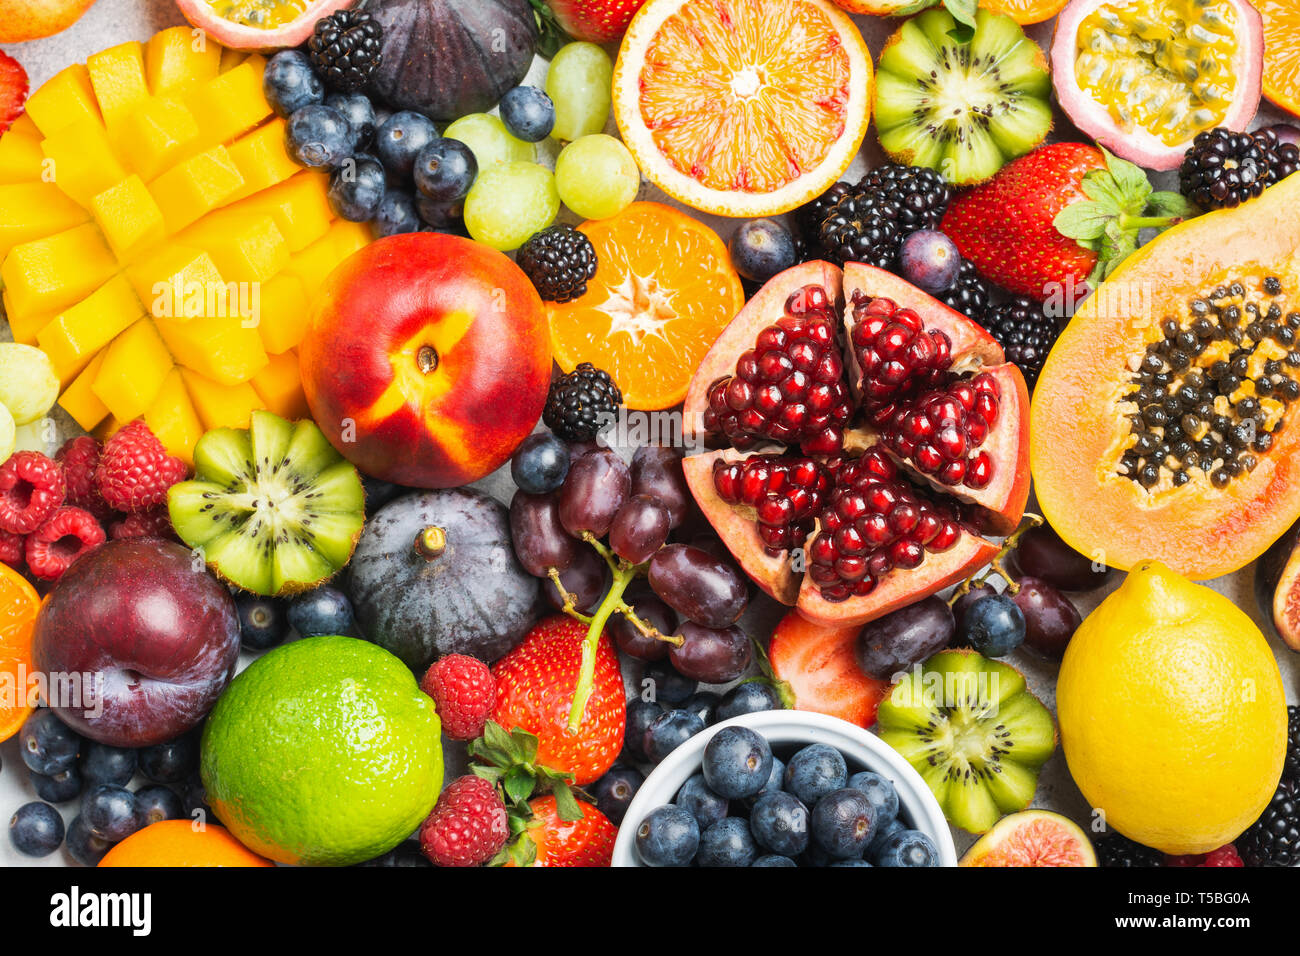 https://c8.alamy.com/comp/T5BG0A/delicious-healthy-fruit-background-mango-papaya-strawberries-oranges-passion-fruits-berries-top-view-selective-focus-T5BG0A.jpg